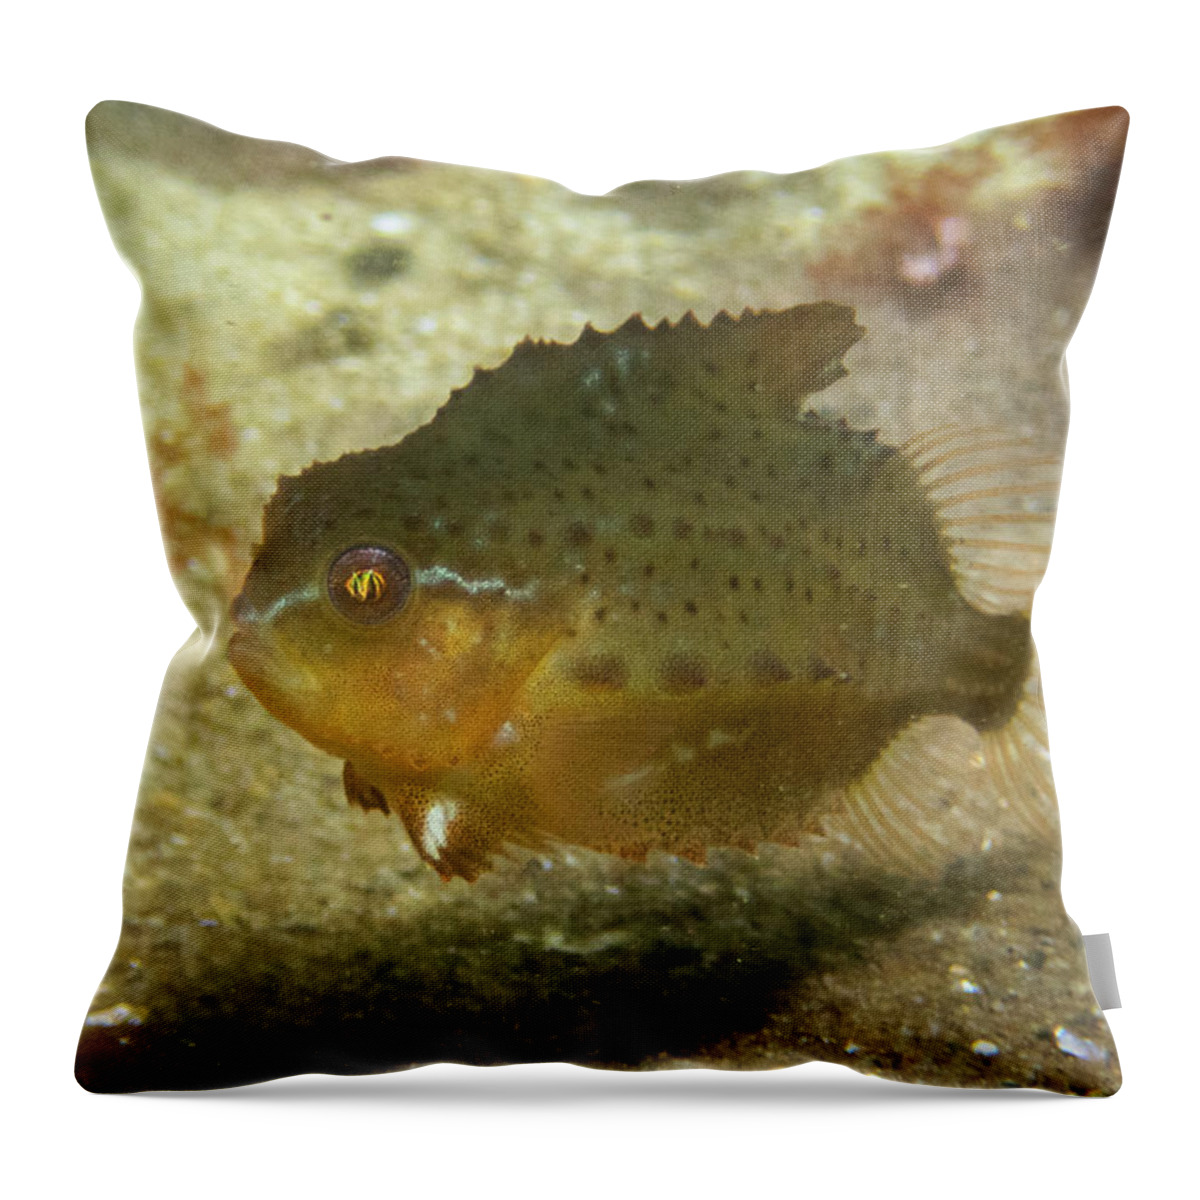 Lumpfish Throw Pillow featuring the photograph Lumpfish by Brian Weber